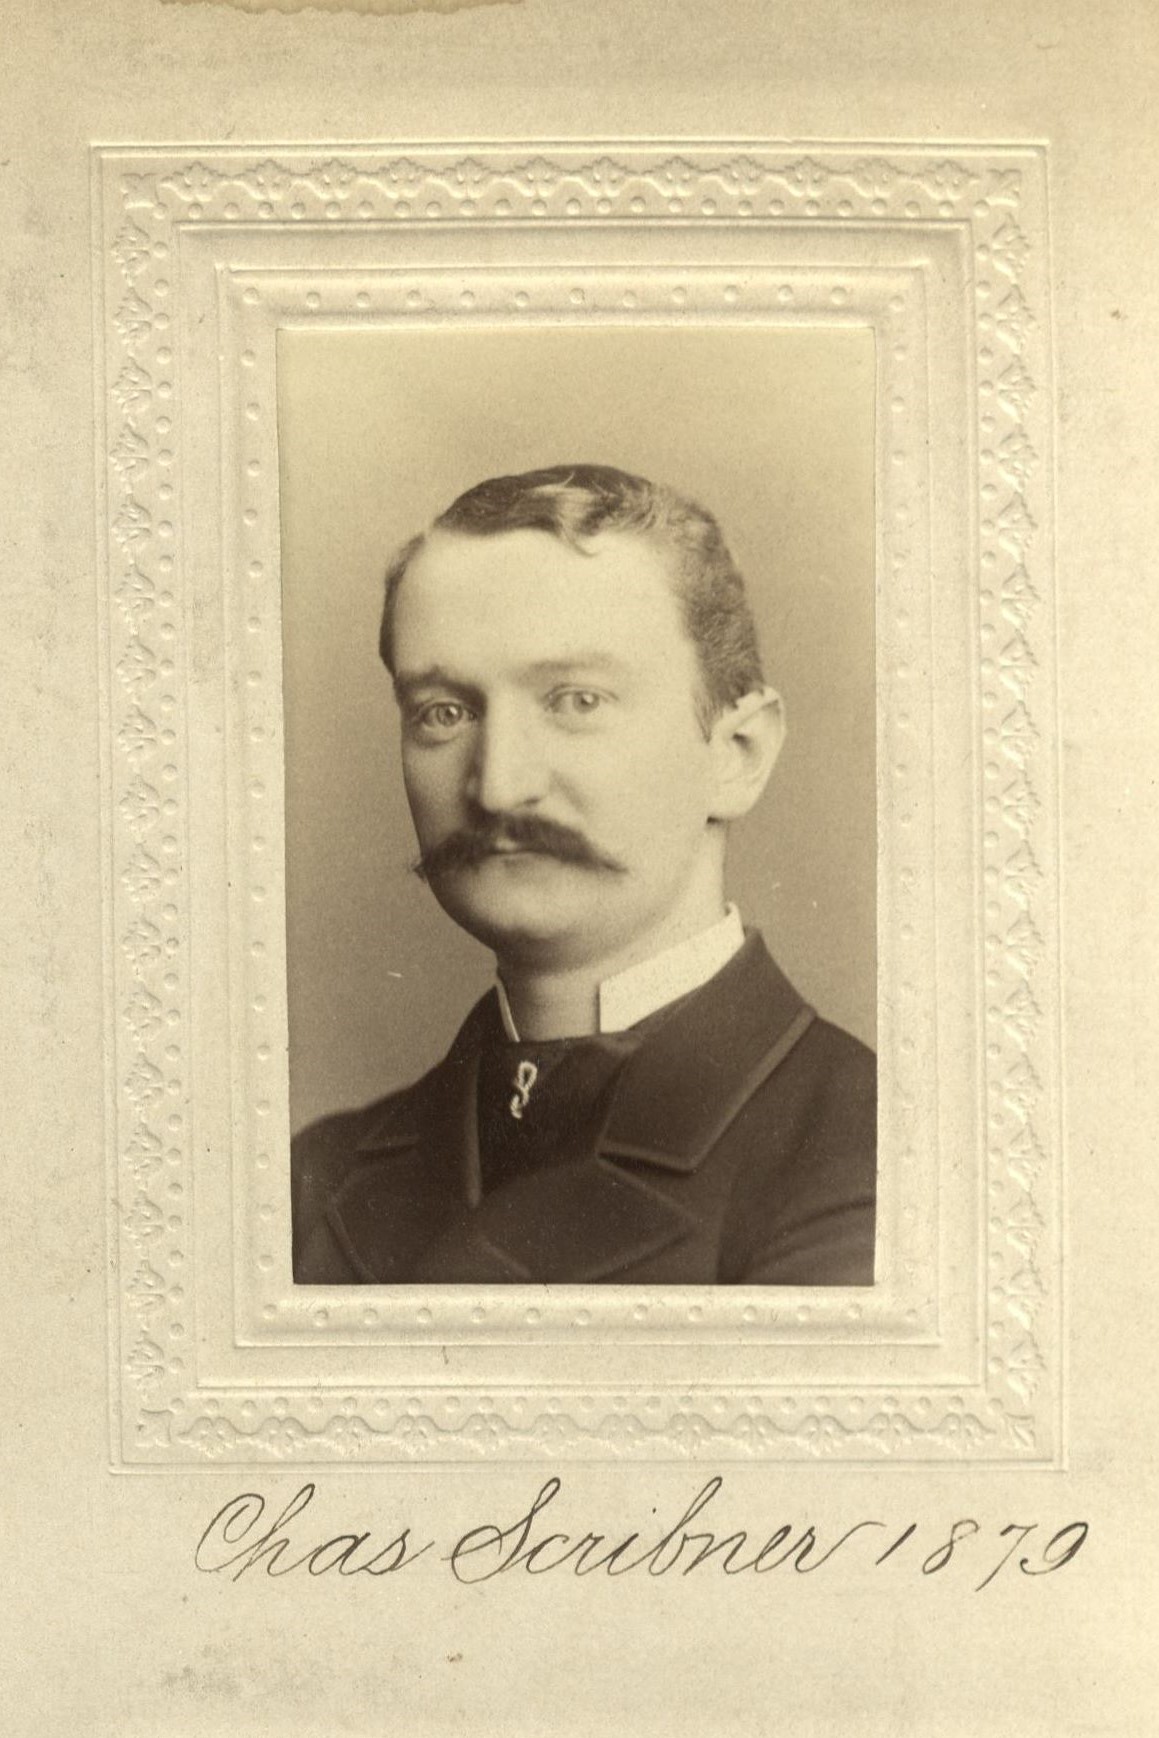 Member portrait of Charles Scribner